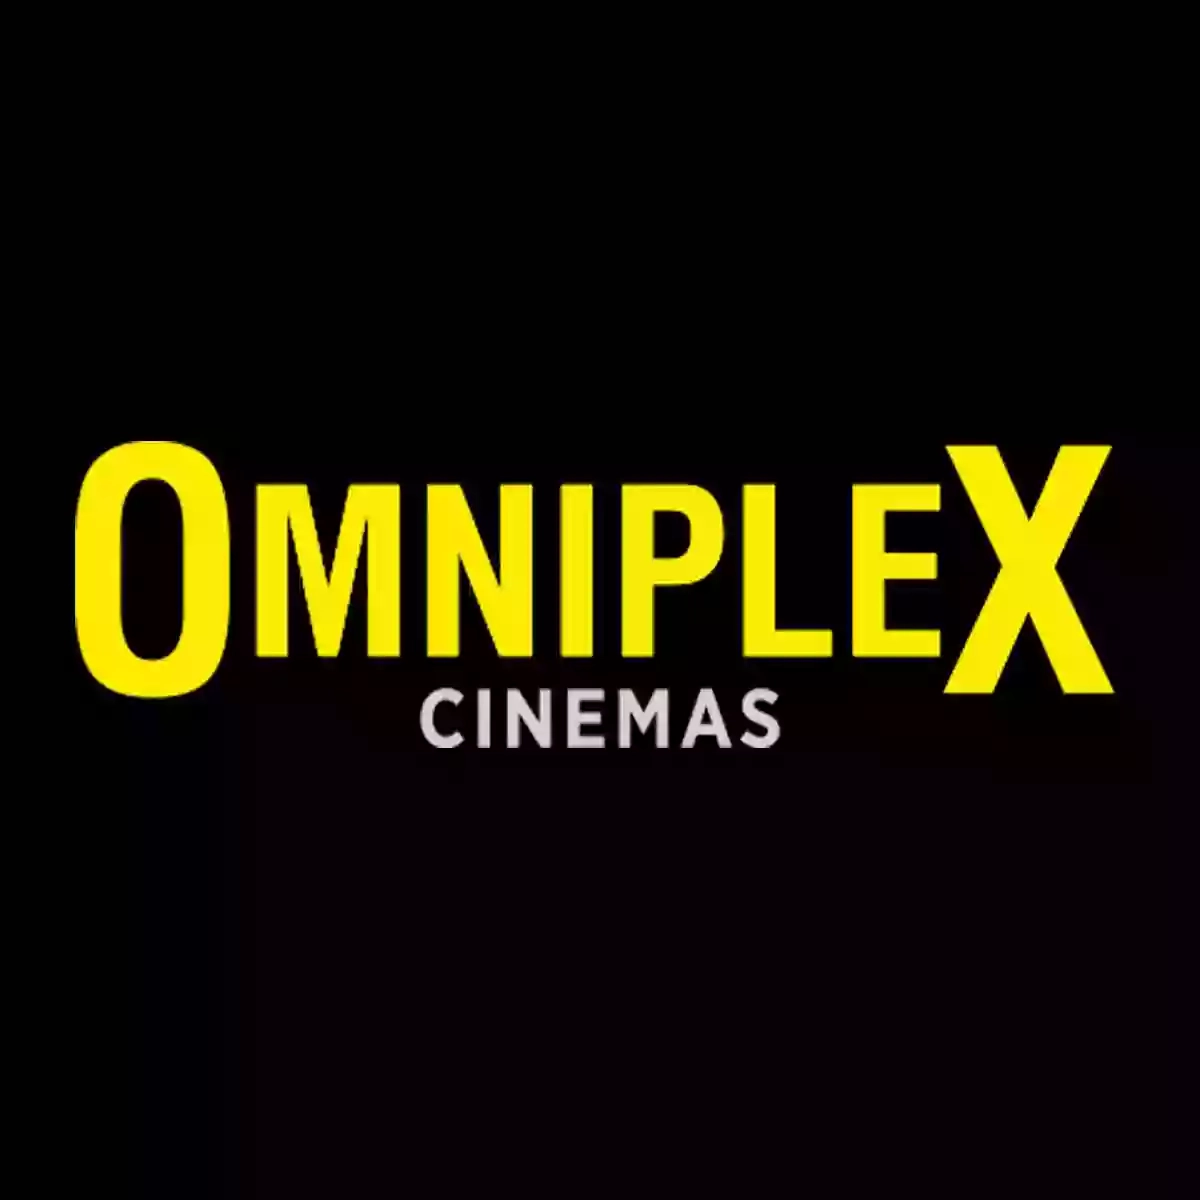 Omniplex Cinema Dublin - Rathmines